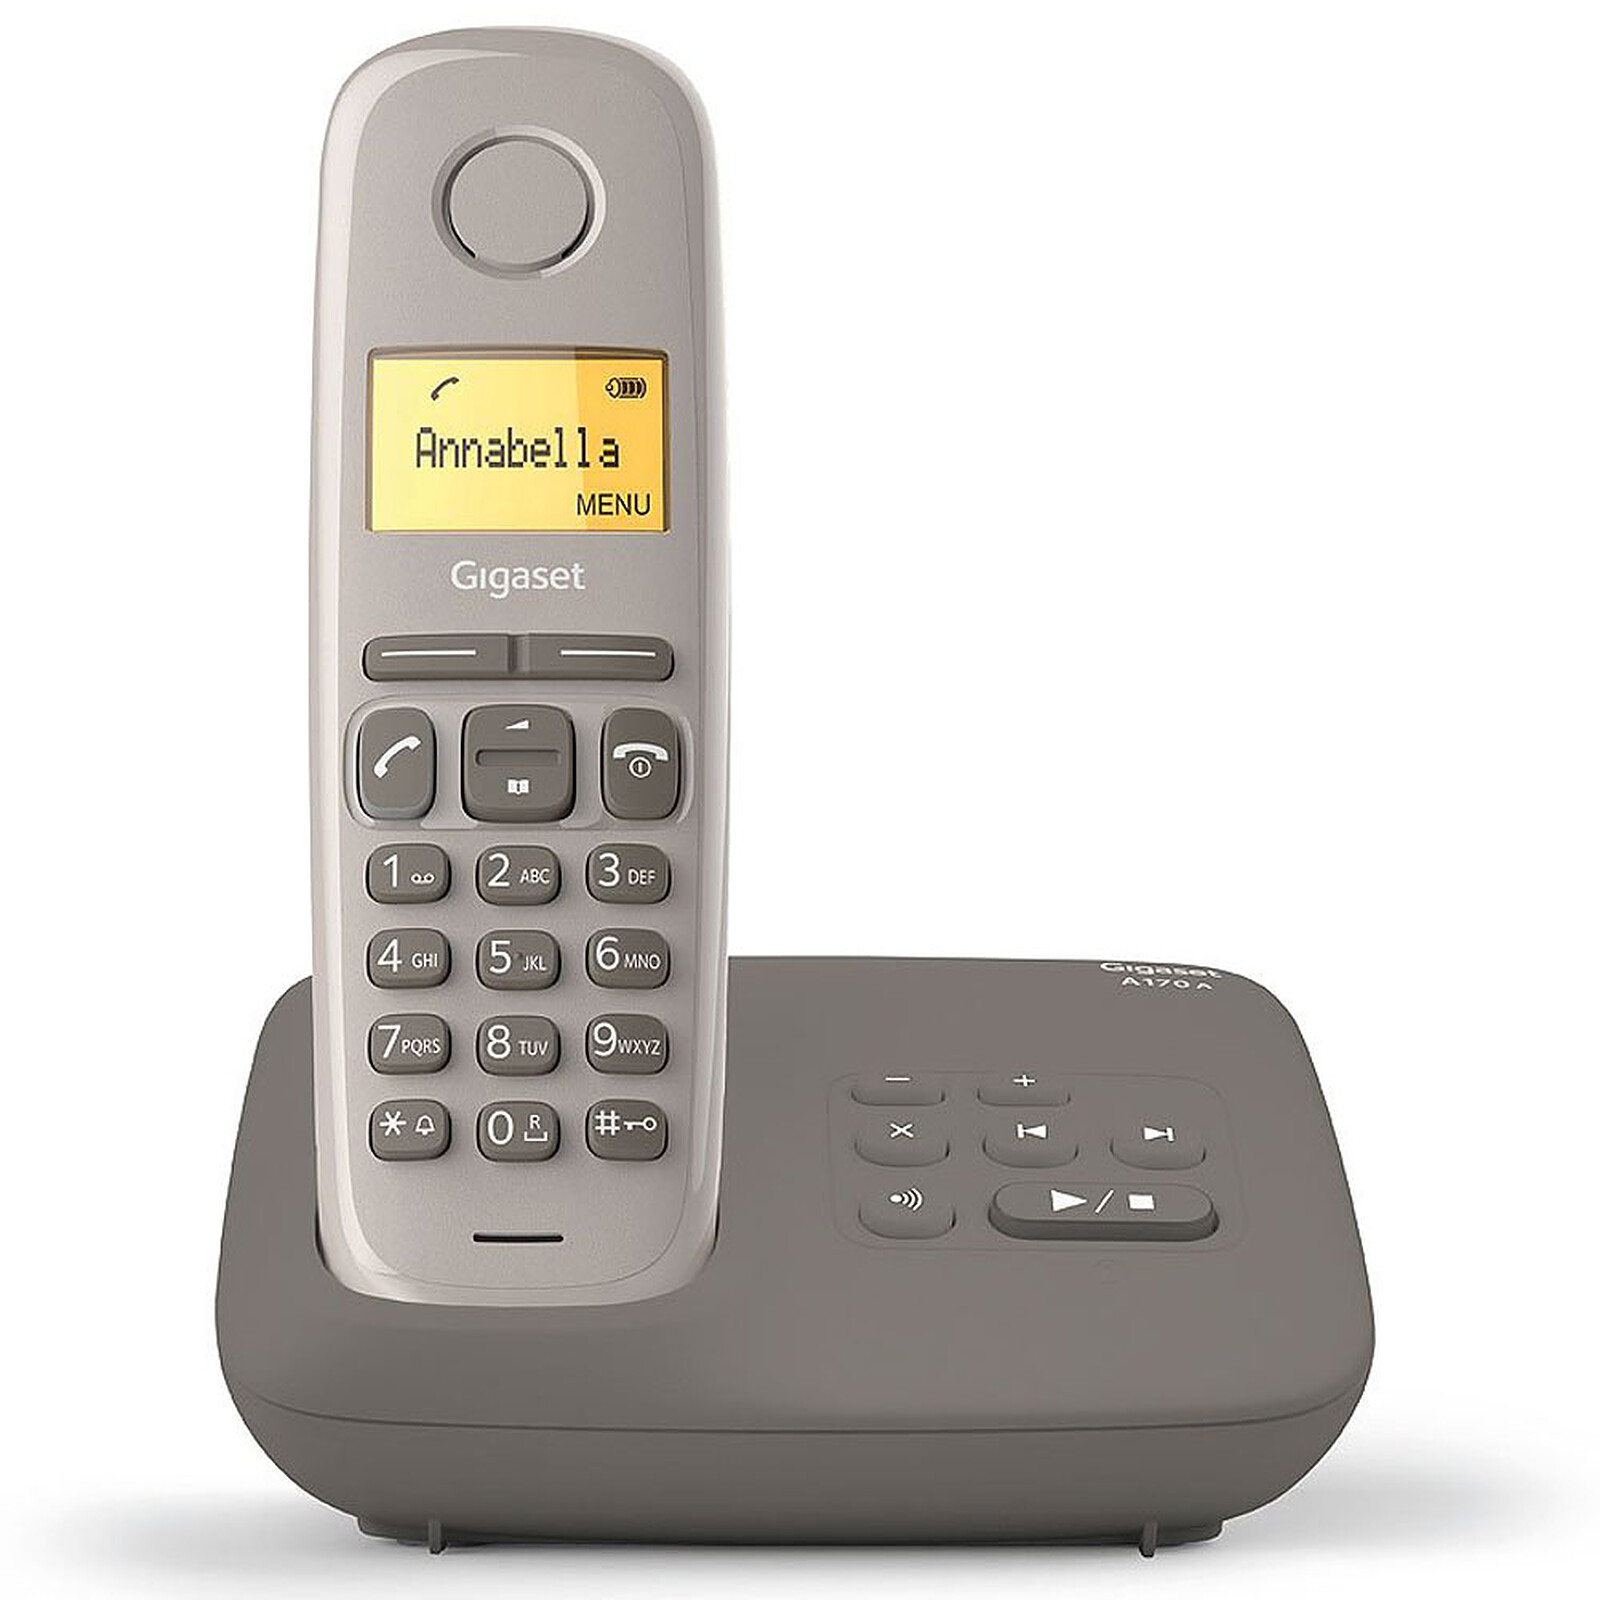 Alcatel XL585 Duo Blanco - Teléfono inalámbrico - LDLC